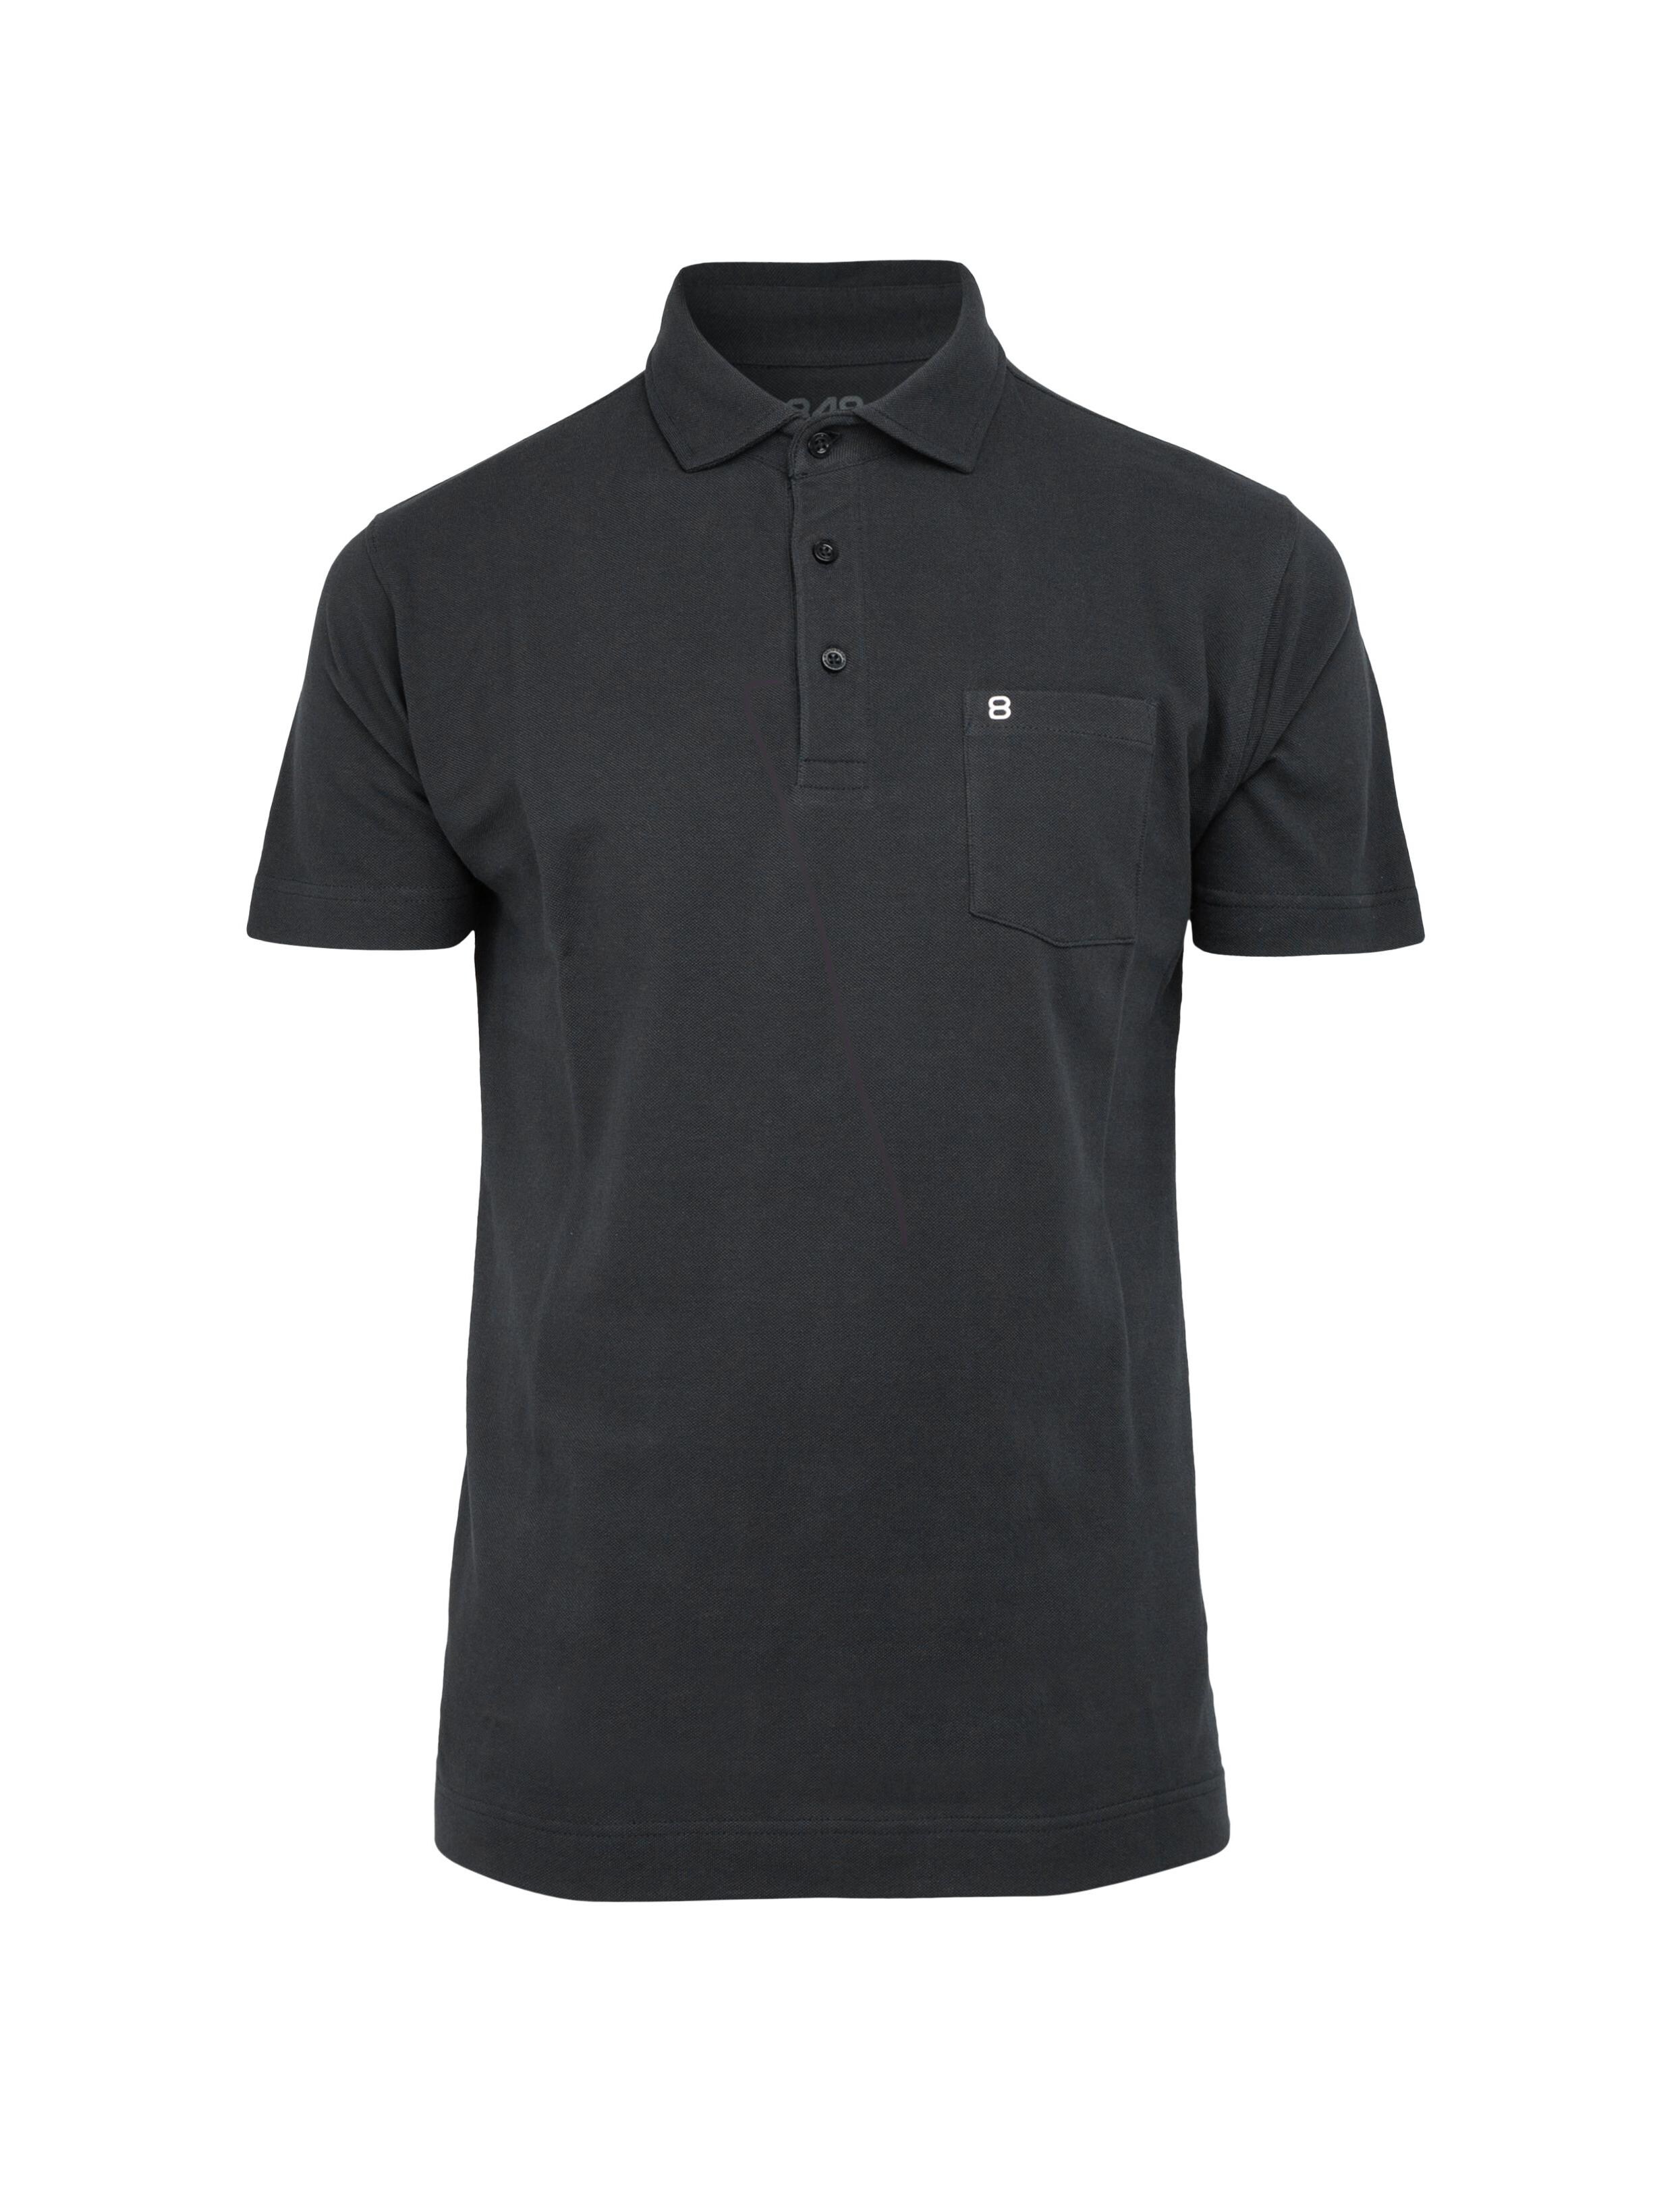 Tersus Polo Shirt Black - Schwarzes Polo Hemd Herren